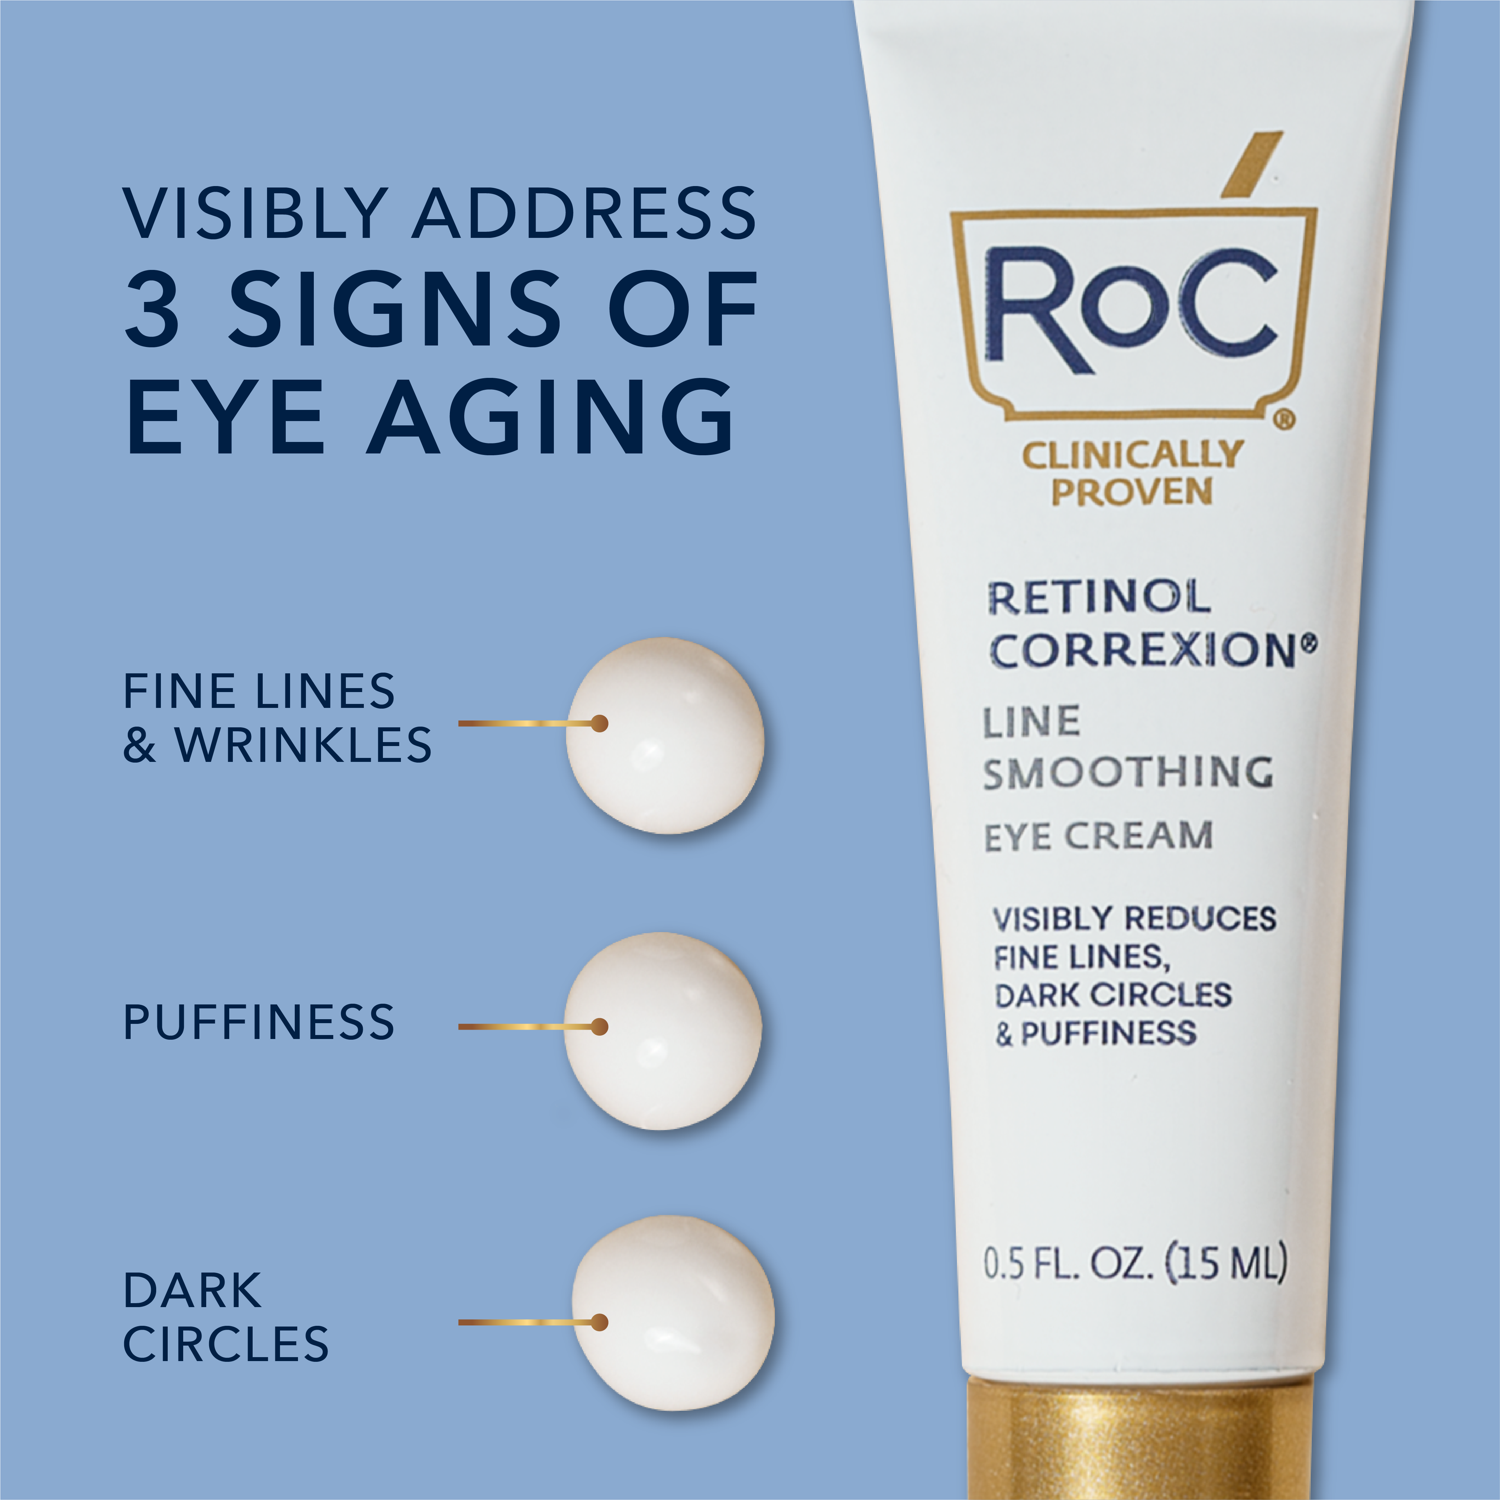 RoC Retinol Correxion Anti-Wrinkle + Firming Eye Cream for Dark Circles & Puffy Eyes, 0.5 oz - image 3 of 12